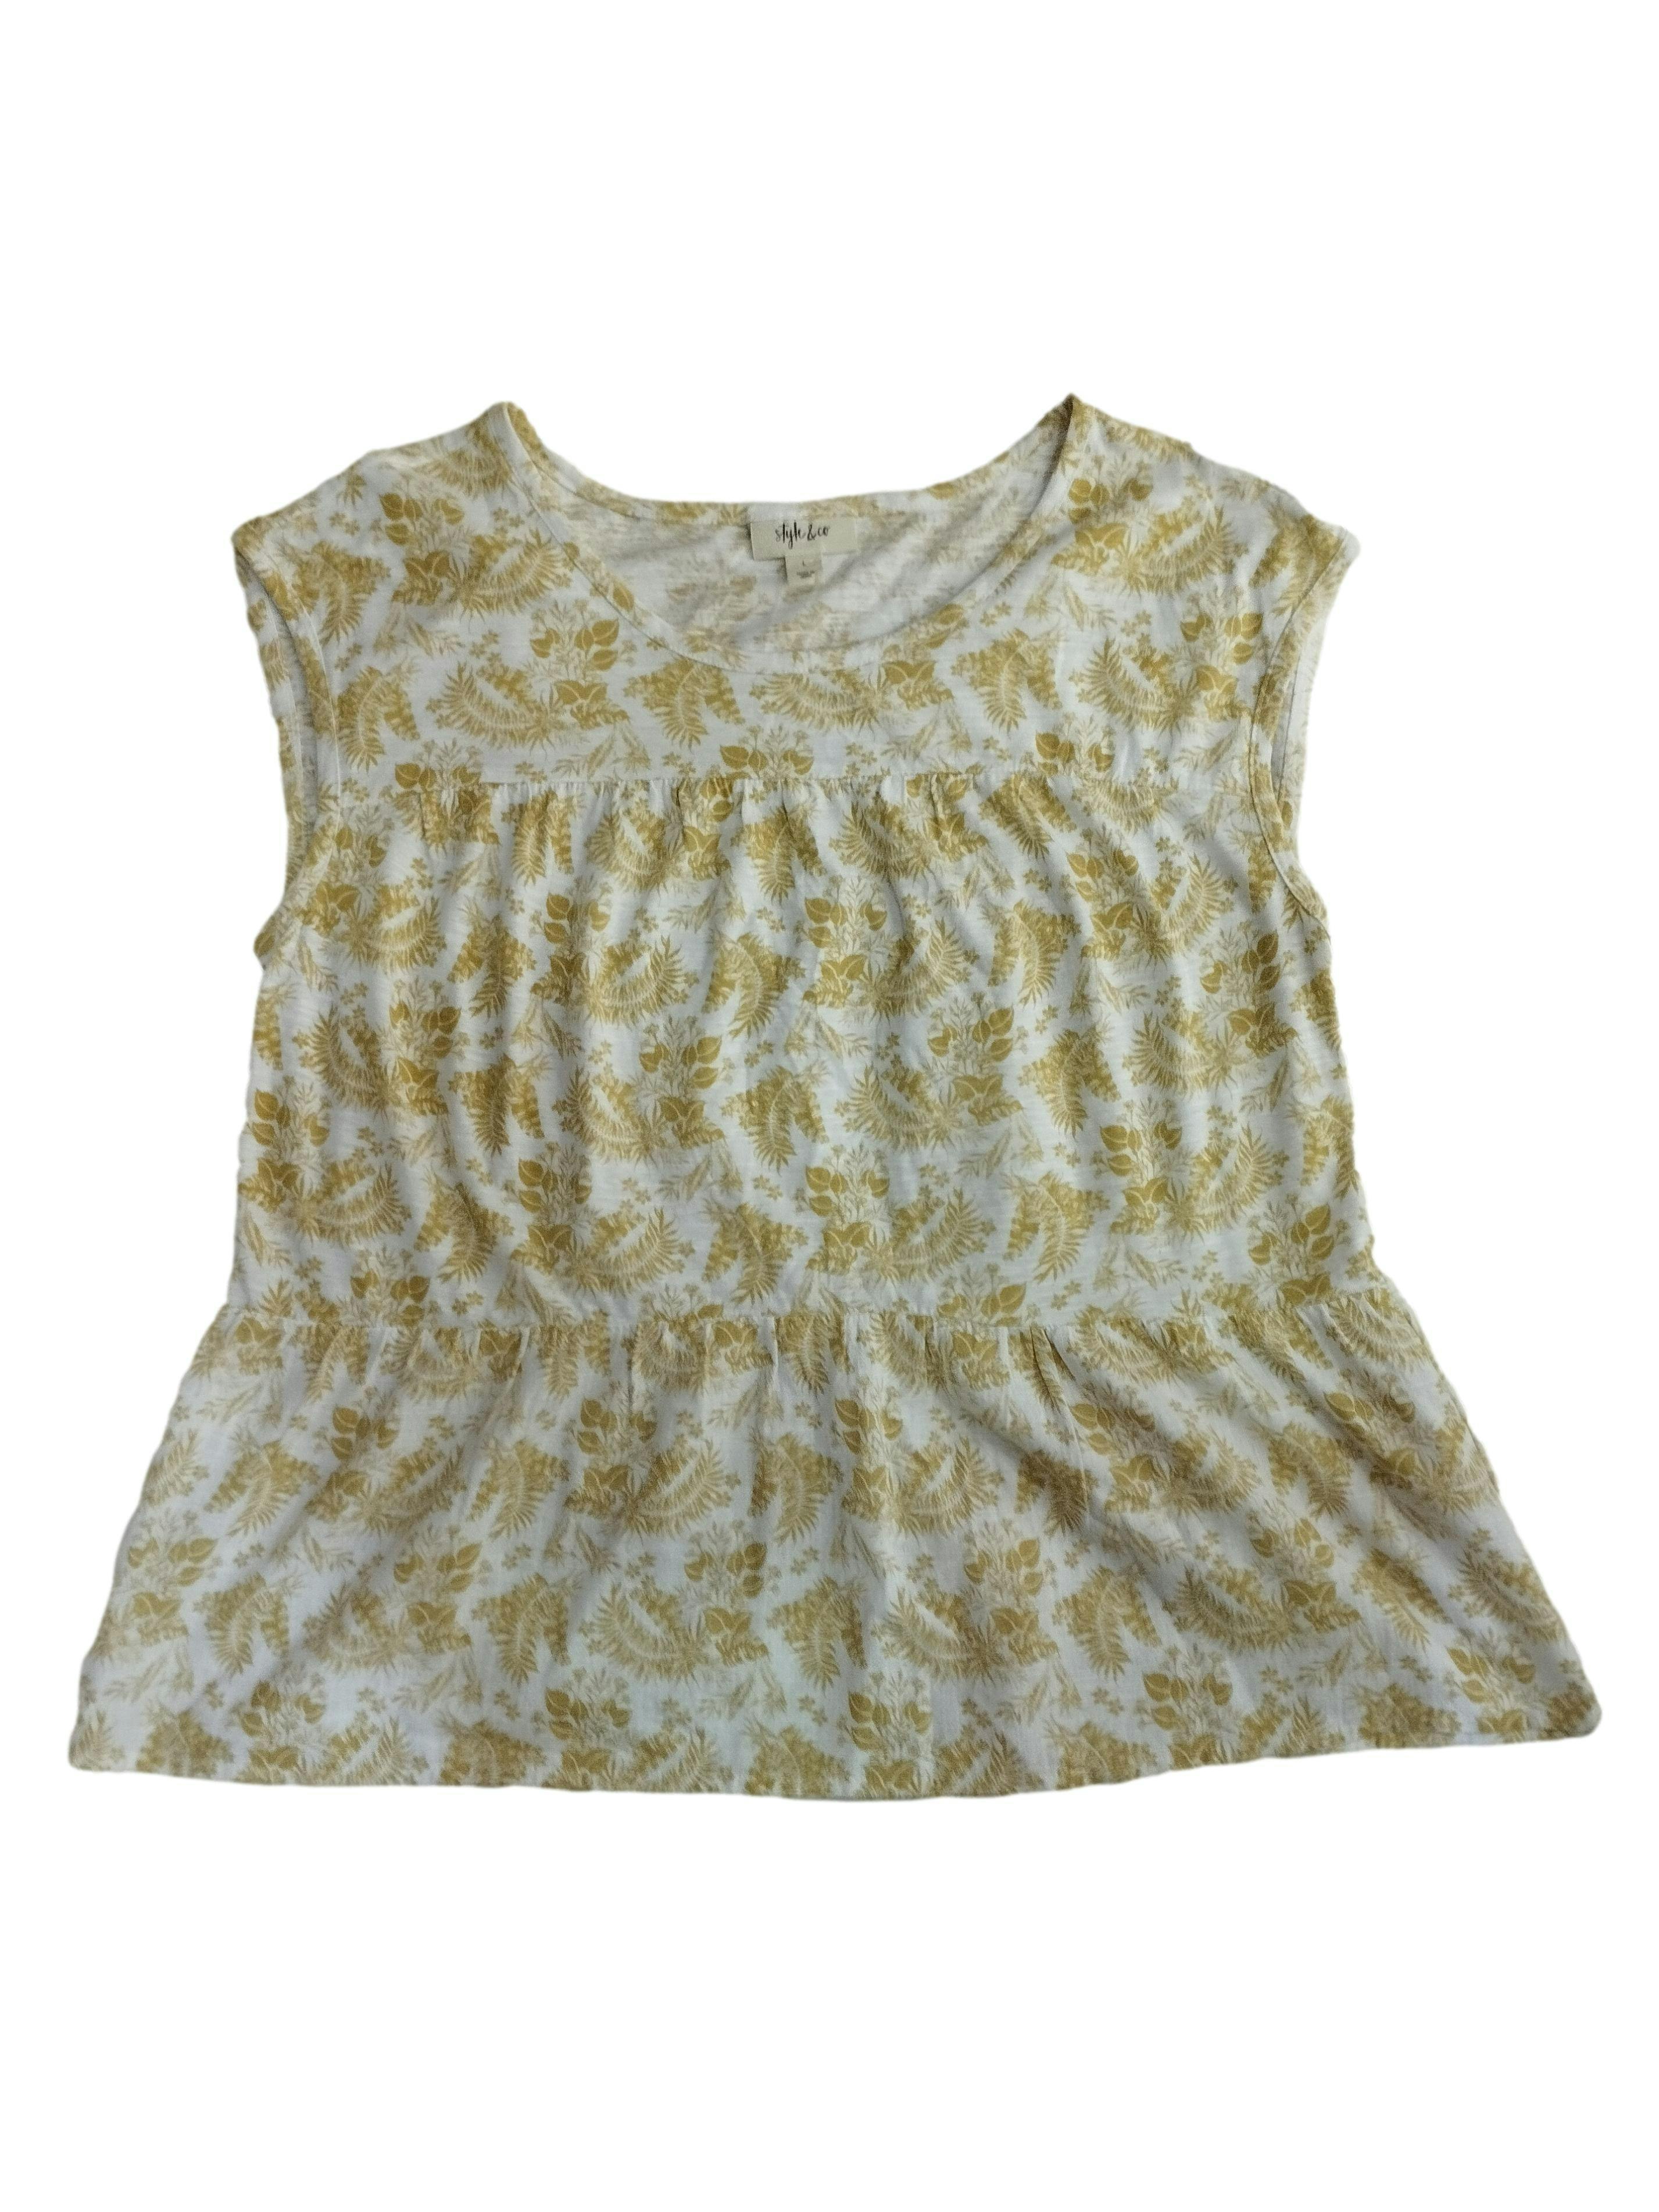 Blusa Style & Co blanca,mezcla de algodon y lino, con floreado amarillo, manga cero. Busto: 112 cm, Largo: 65 cm